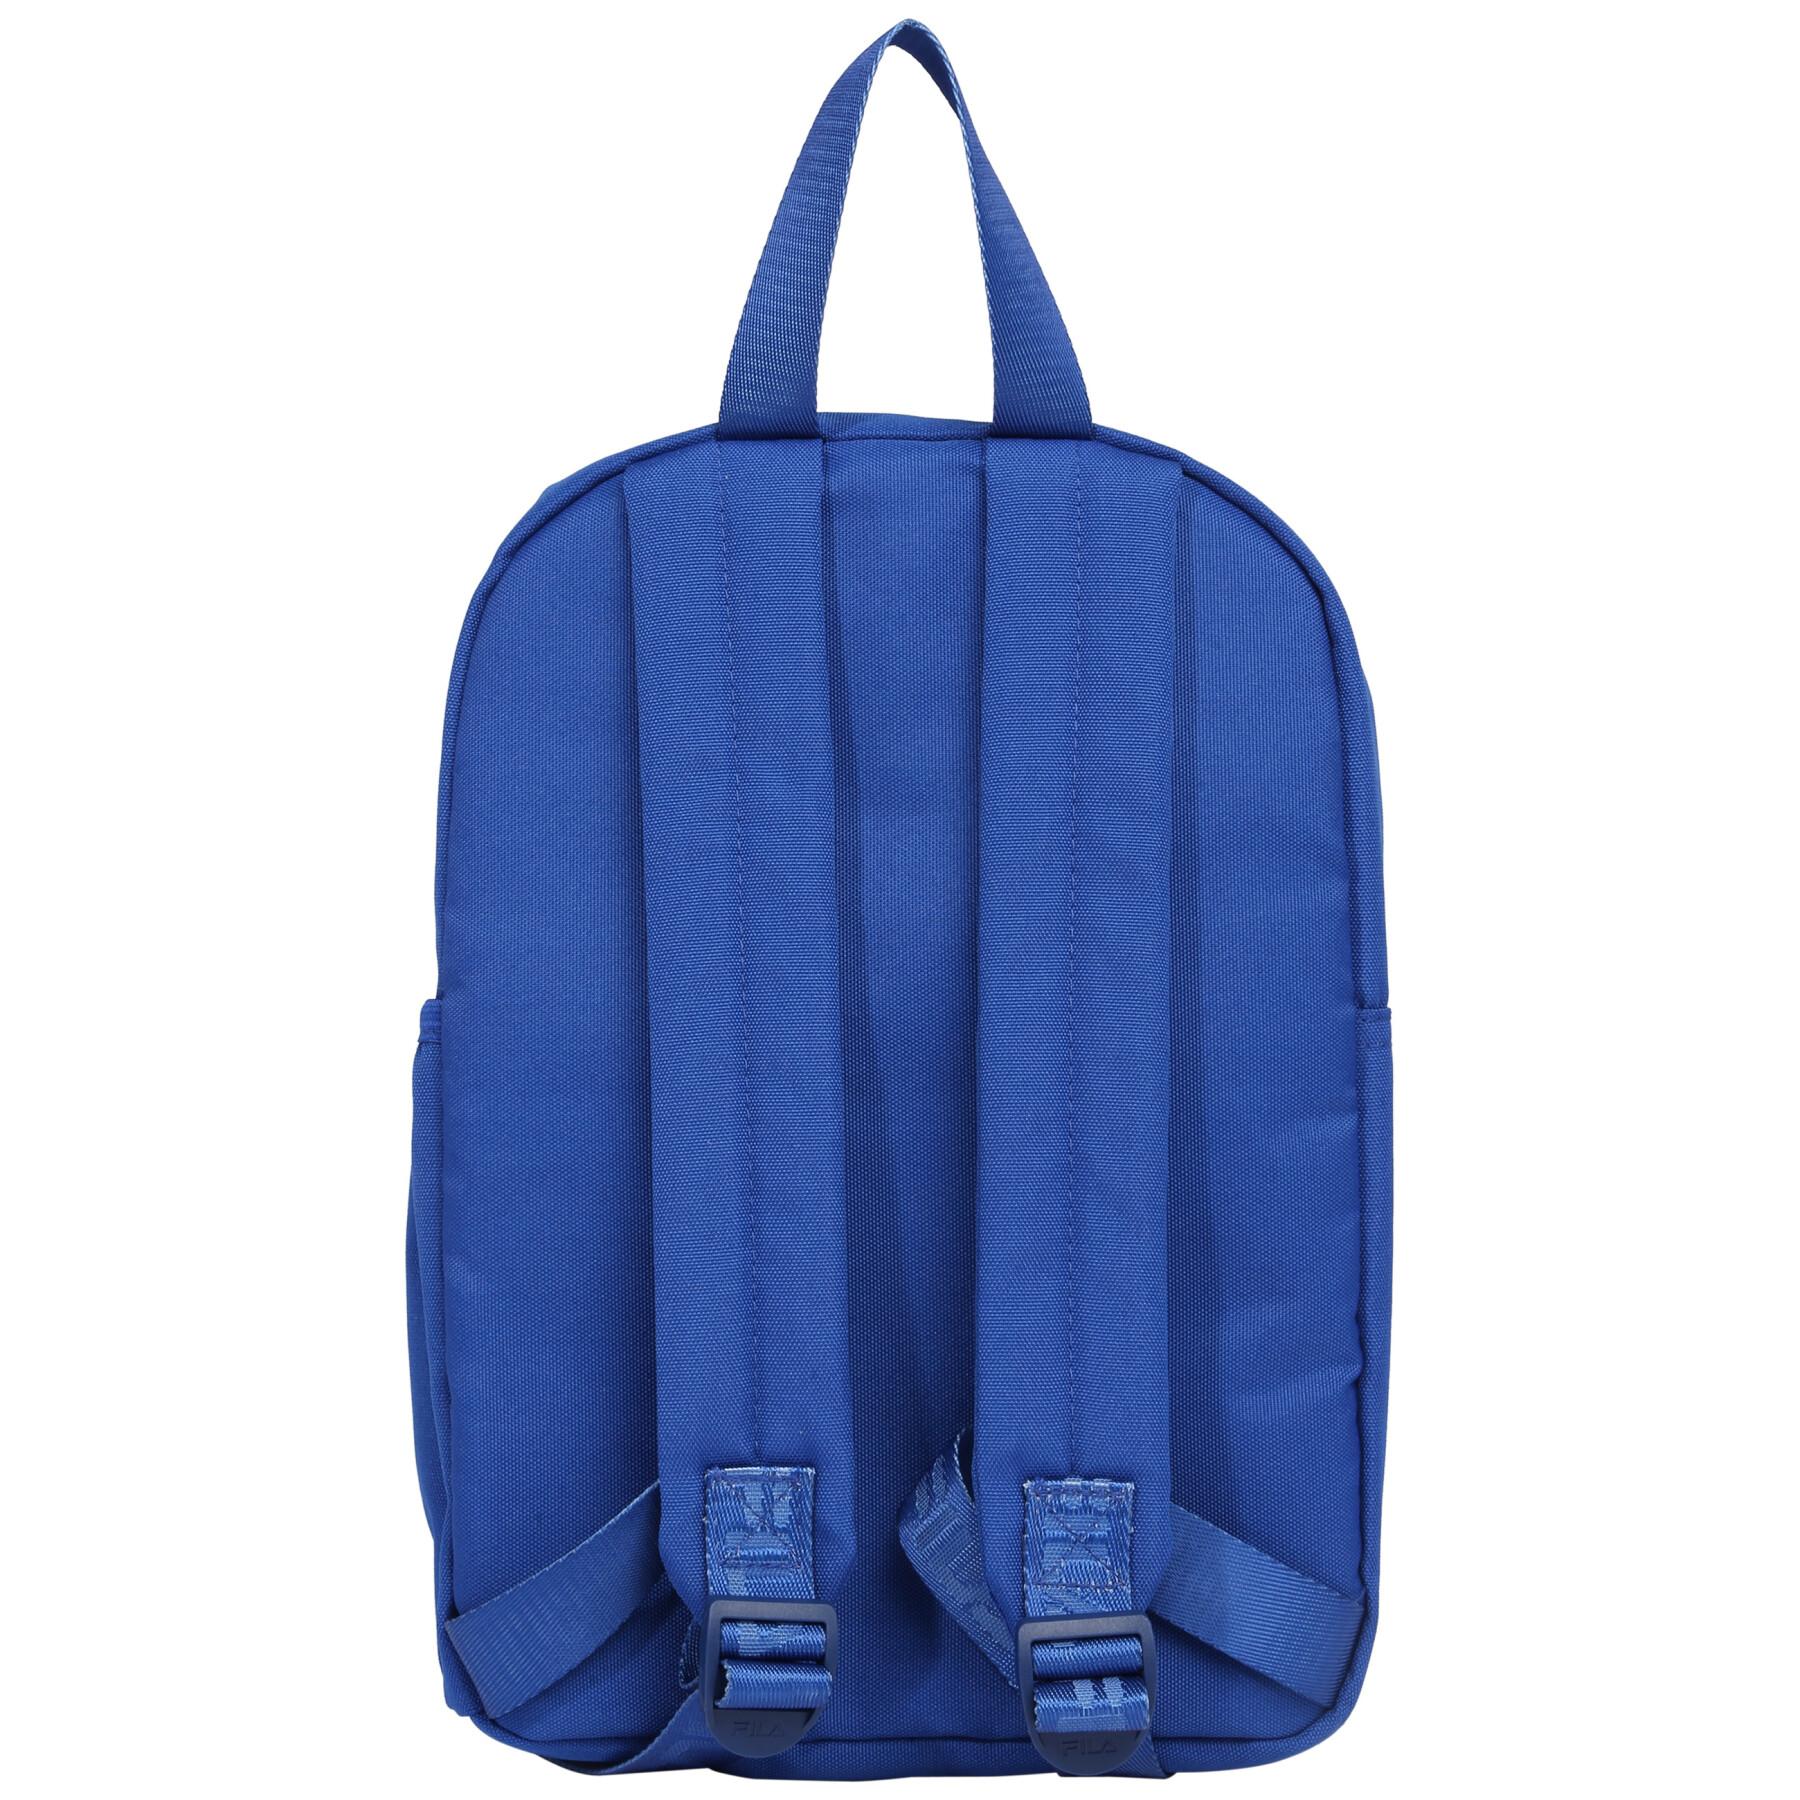 Mini-ryggsäck för barn Fila Bury Easy